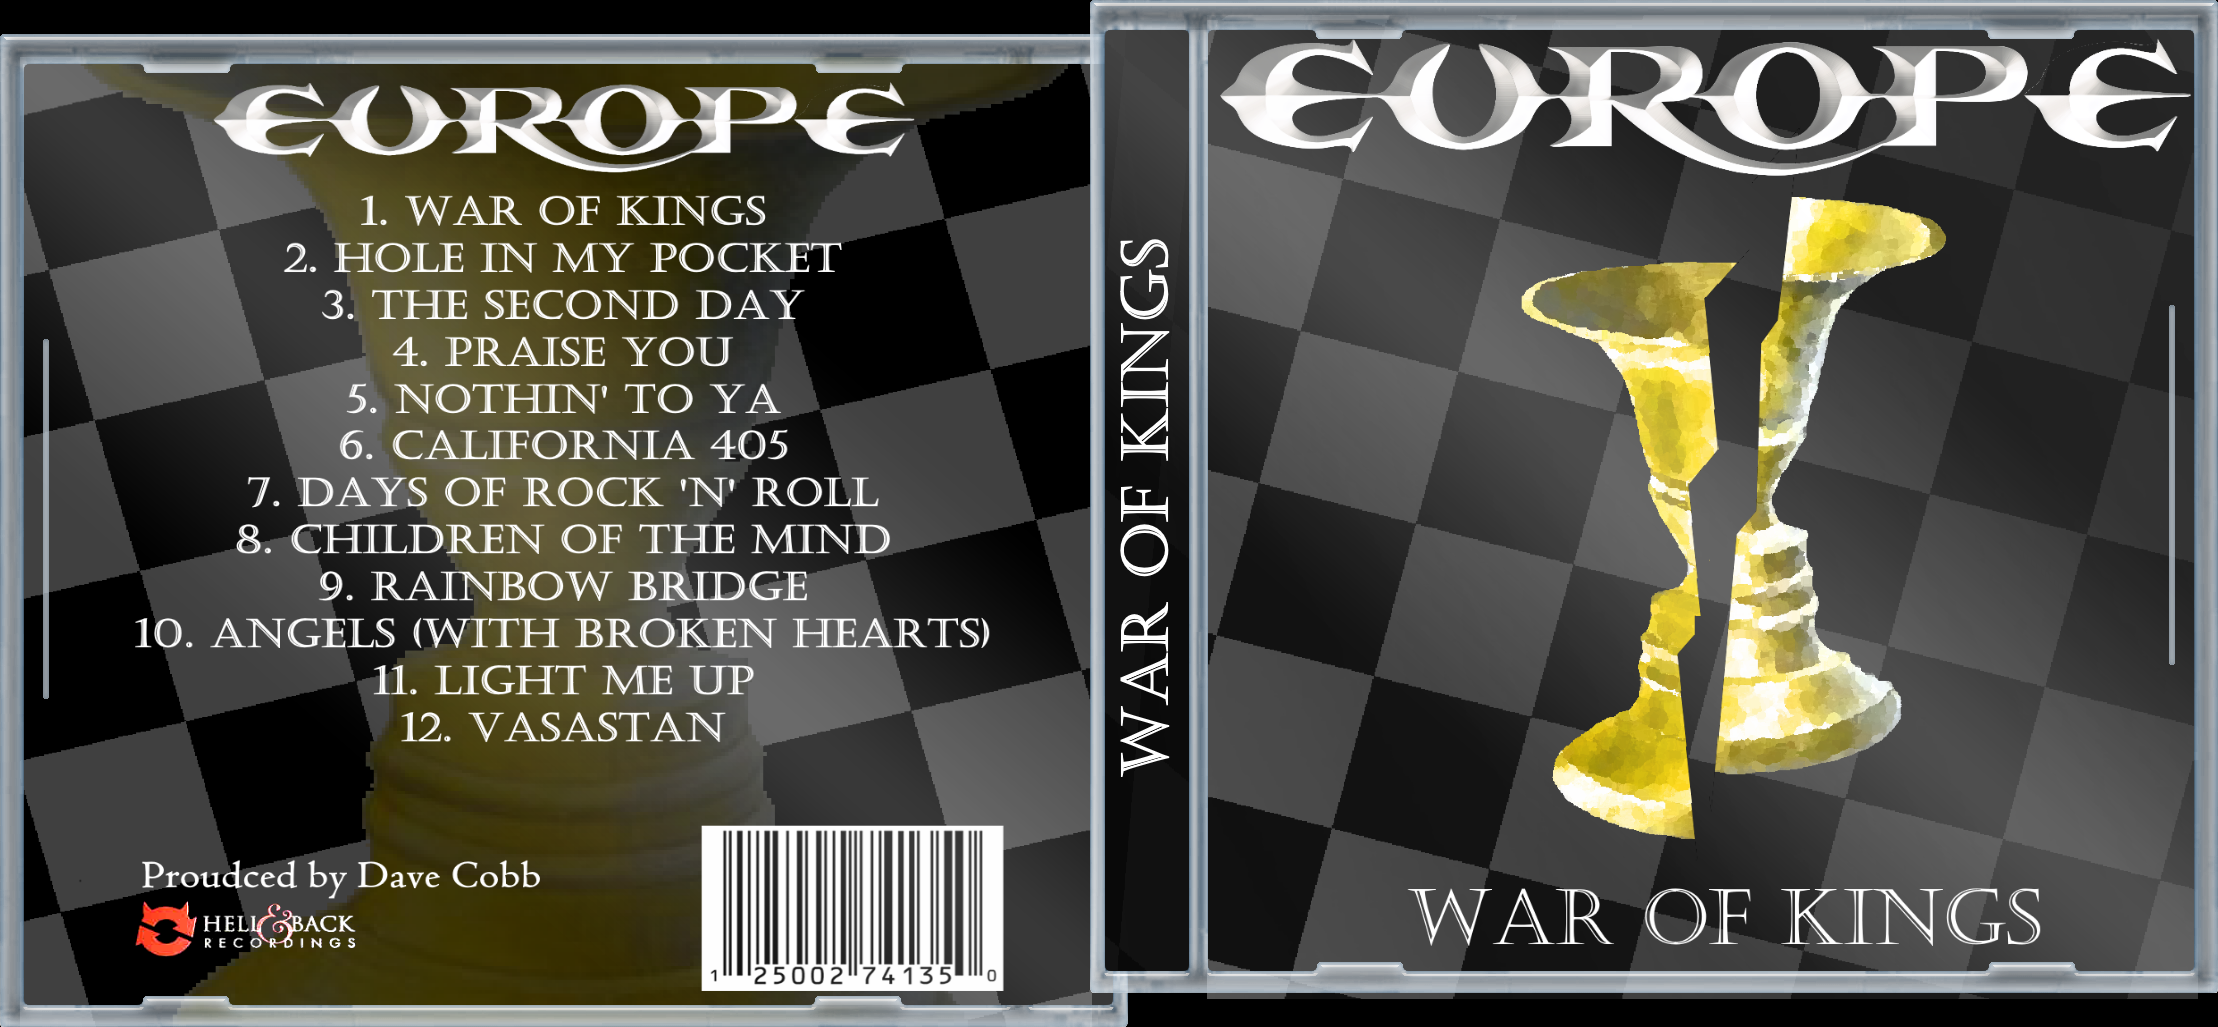 Europe - War of Kings box cover